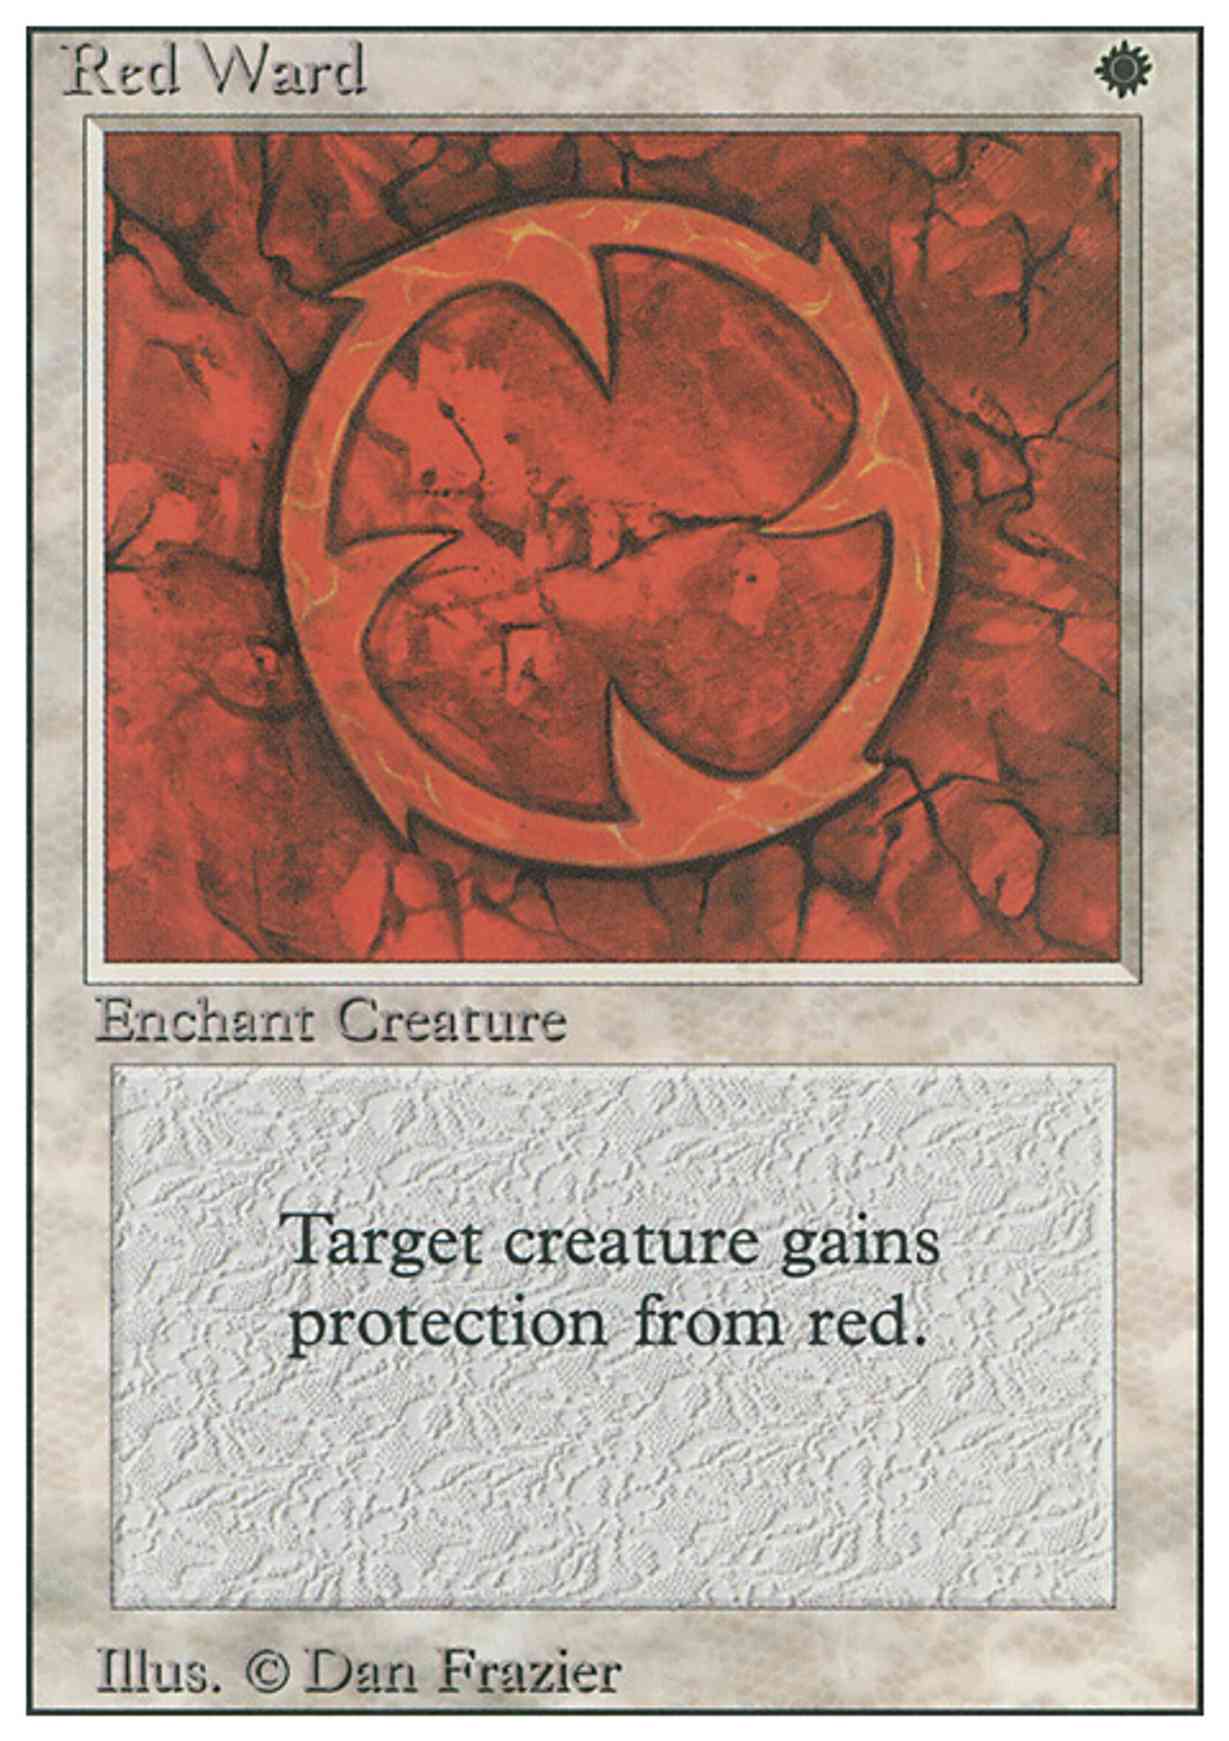 Red Ward magic card front